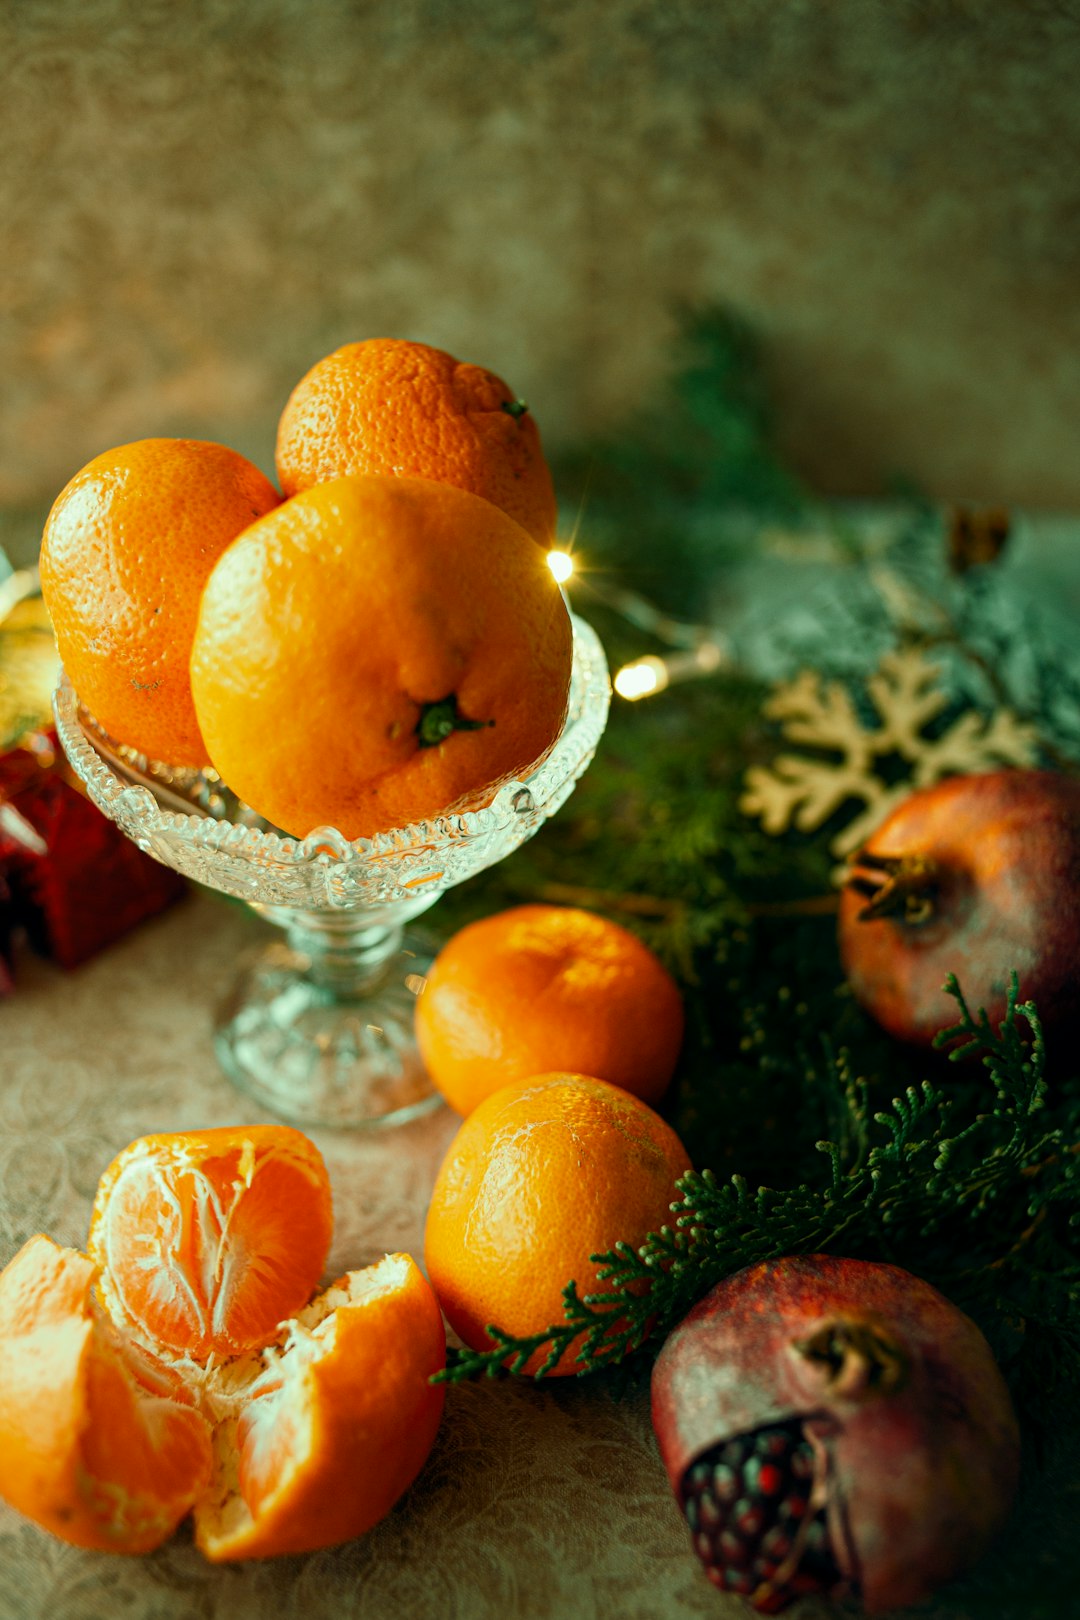 orange fruit on clear cut glass bowl